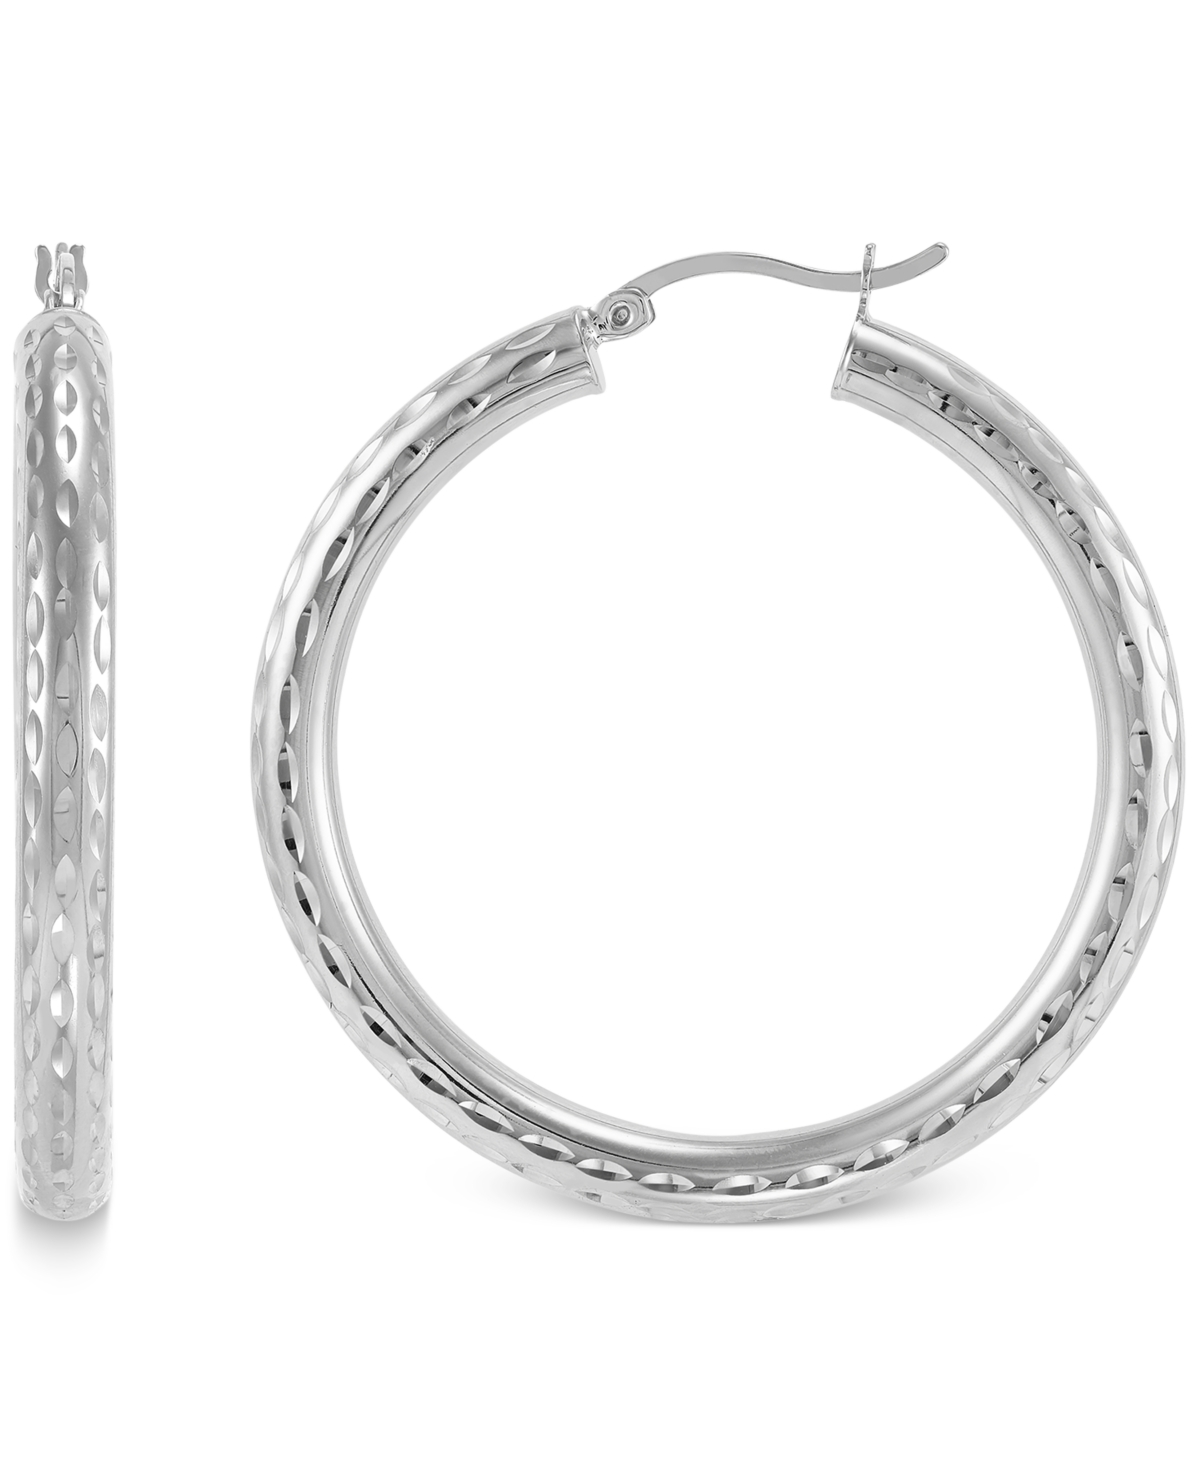 Giani Bernini Textured Tube Medium Hoop Earrings, 40mm, Created For Macy's In Silver